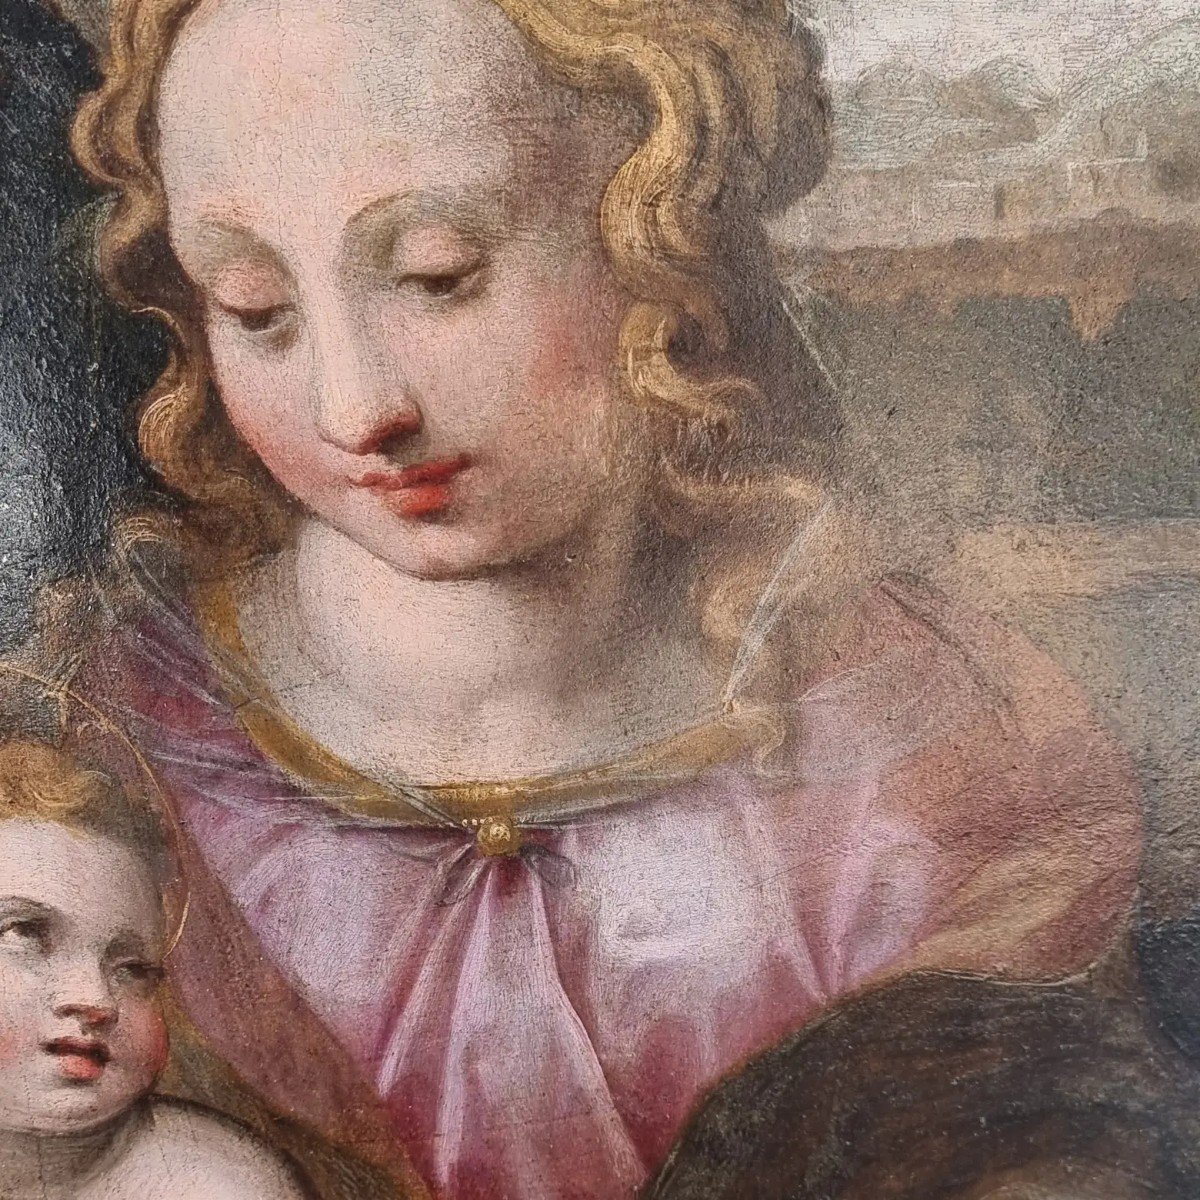 Virgin And Child And Saint John, Oil On Panel, 16th Century-photo-3